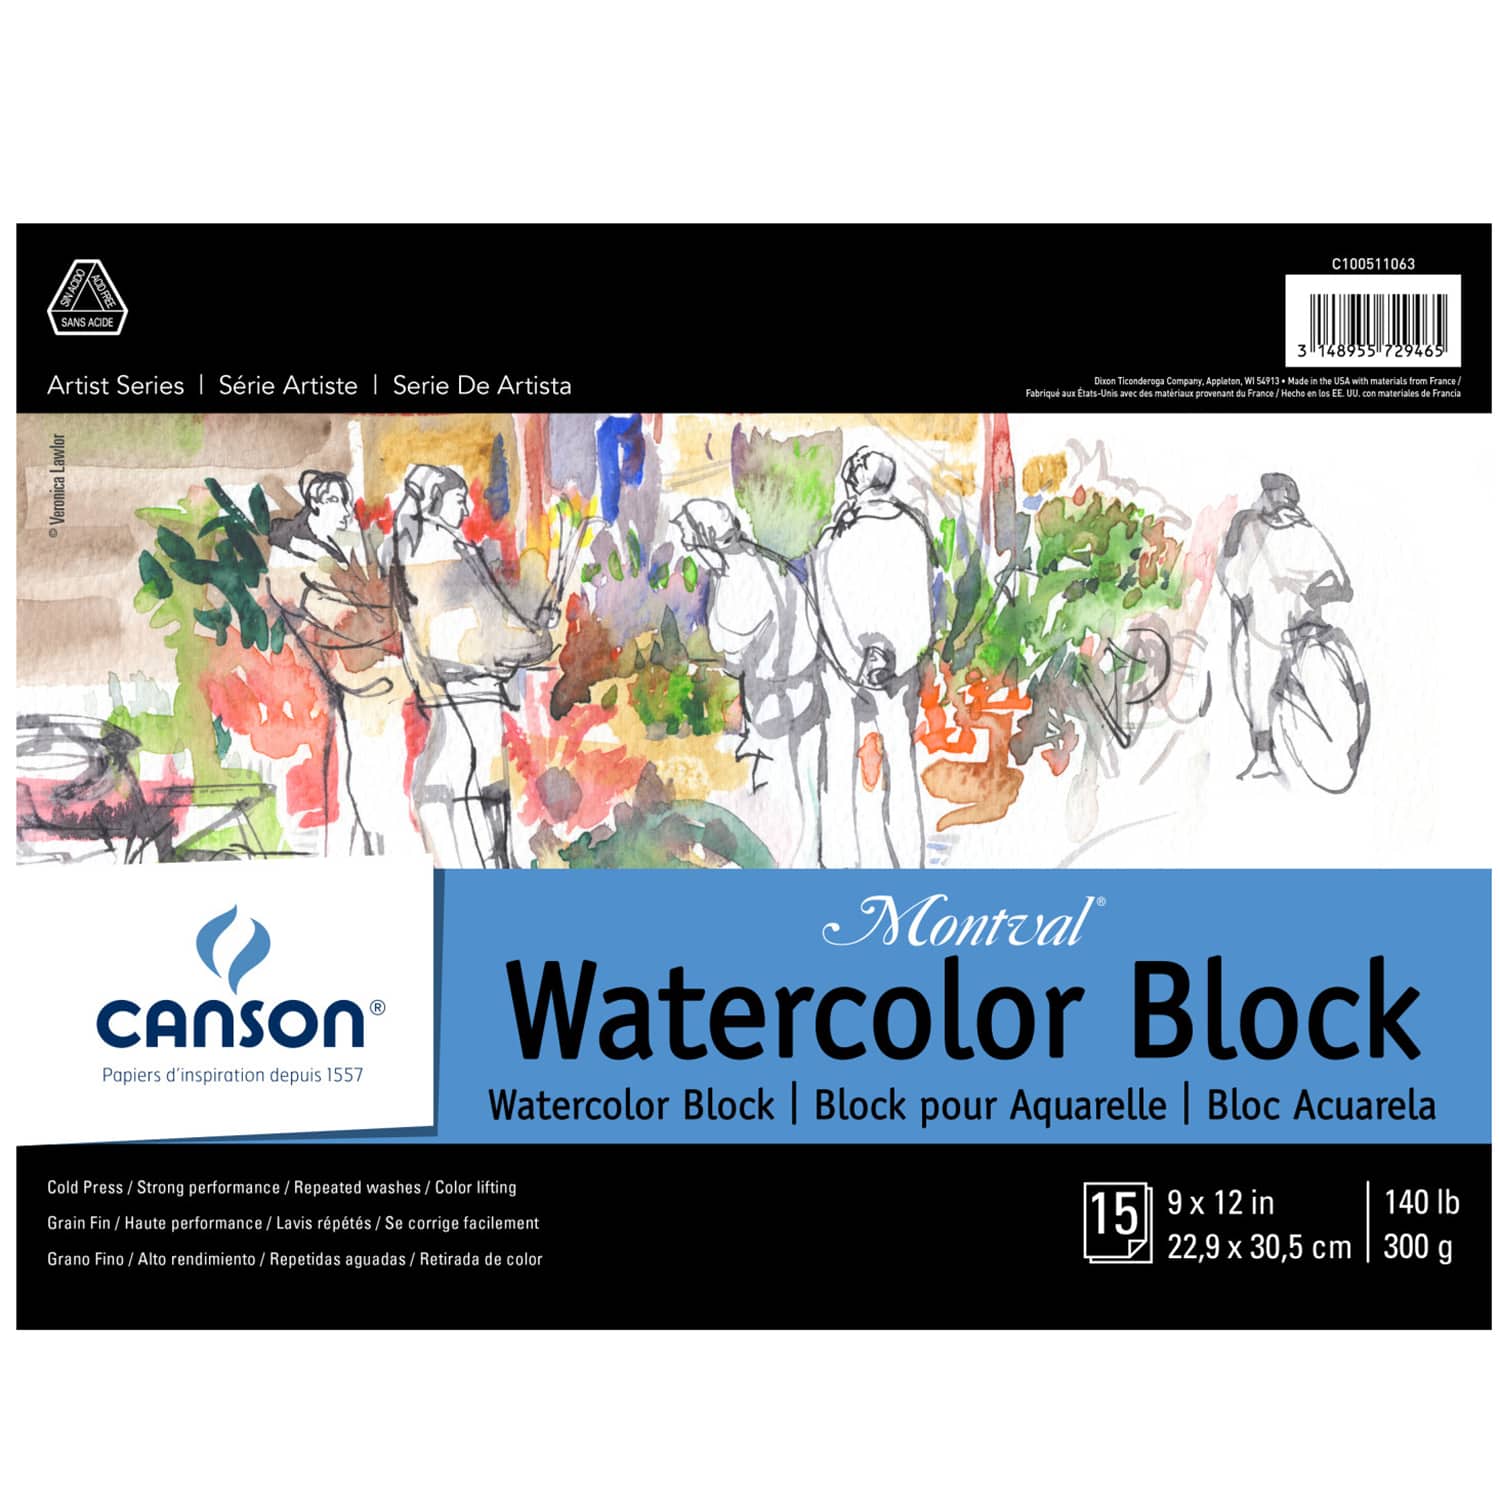 Canson Montval Watercolor Art Board